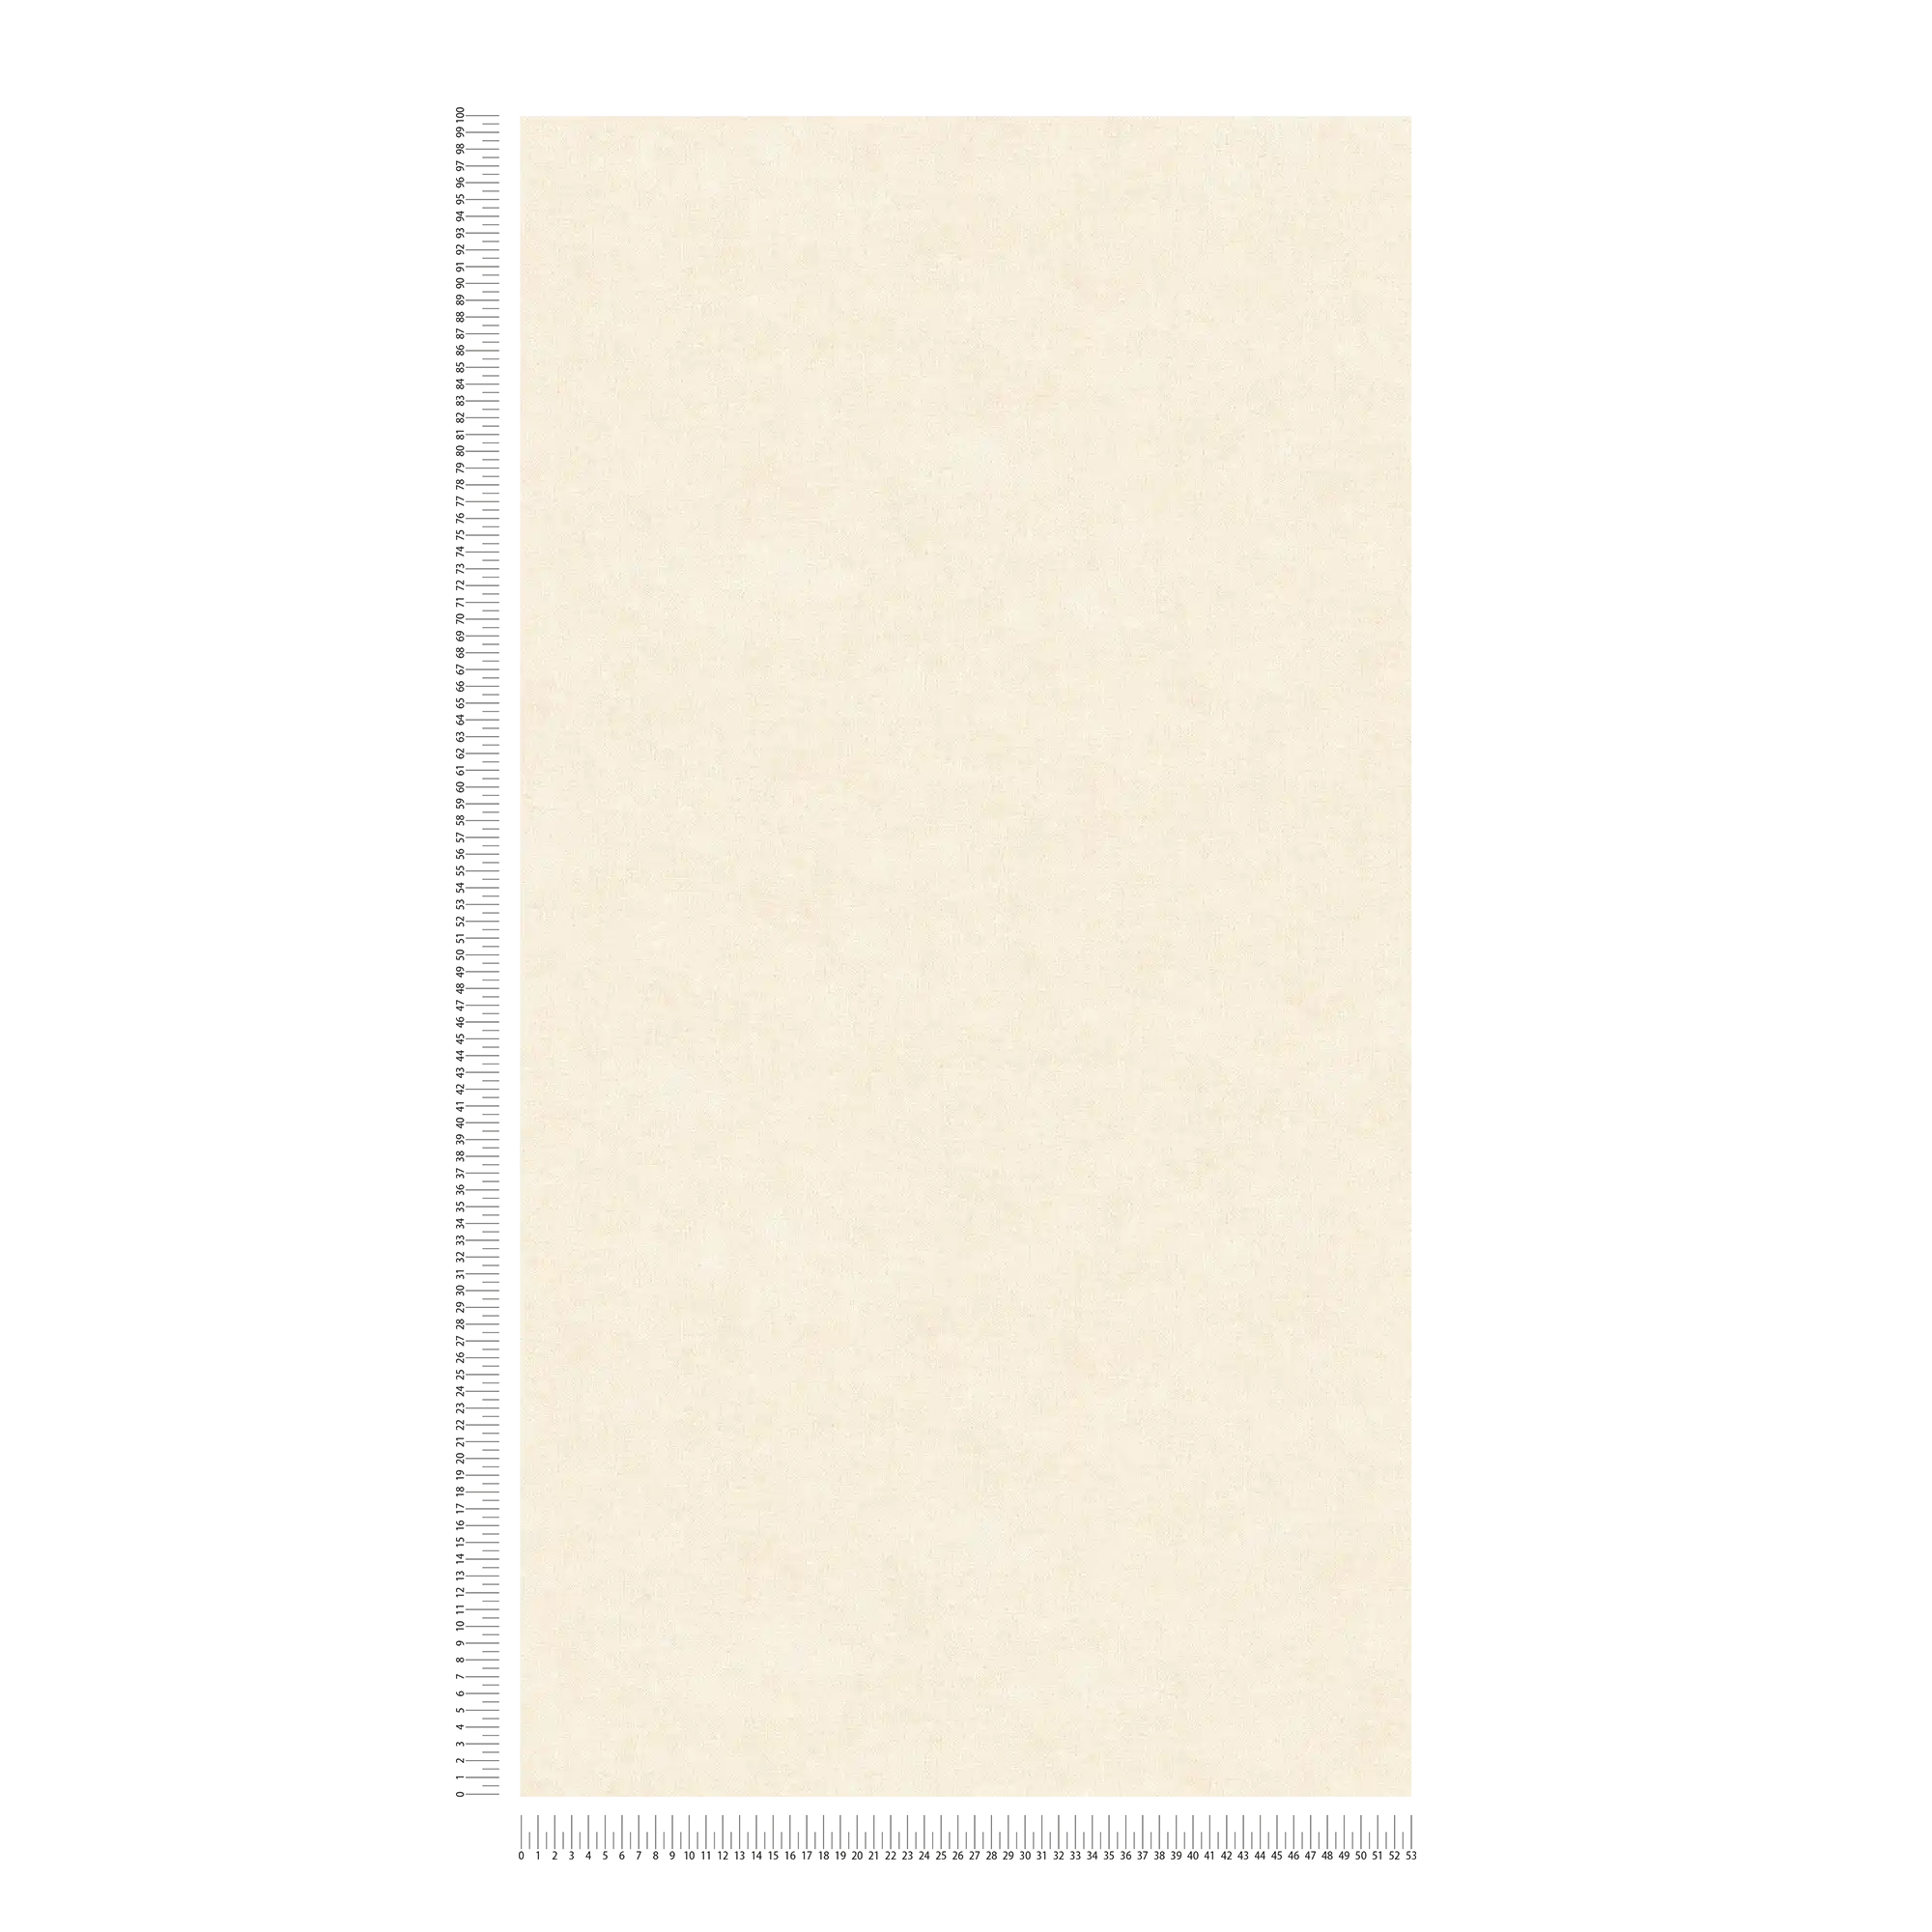             Wallpaper cream beige plain & matte, with texture pattern
        